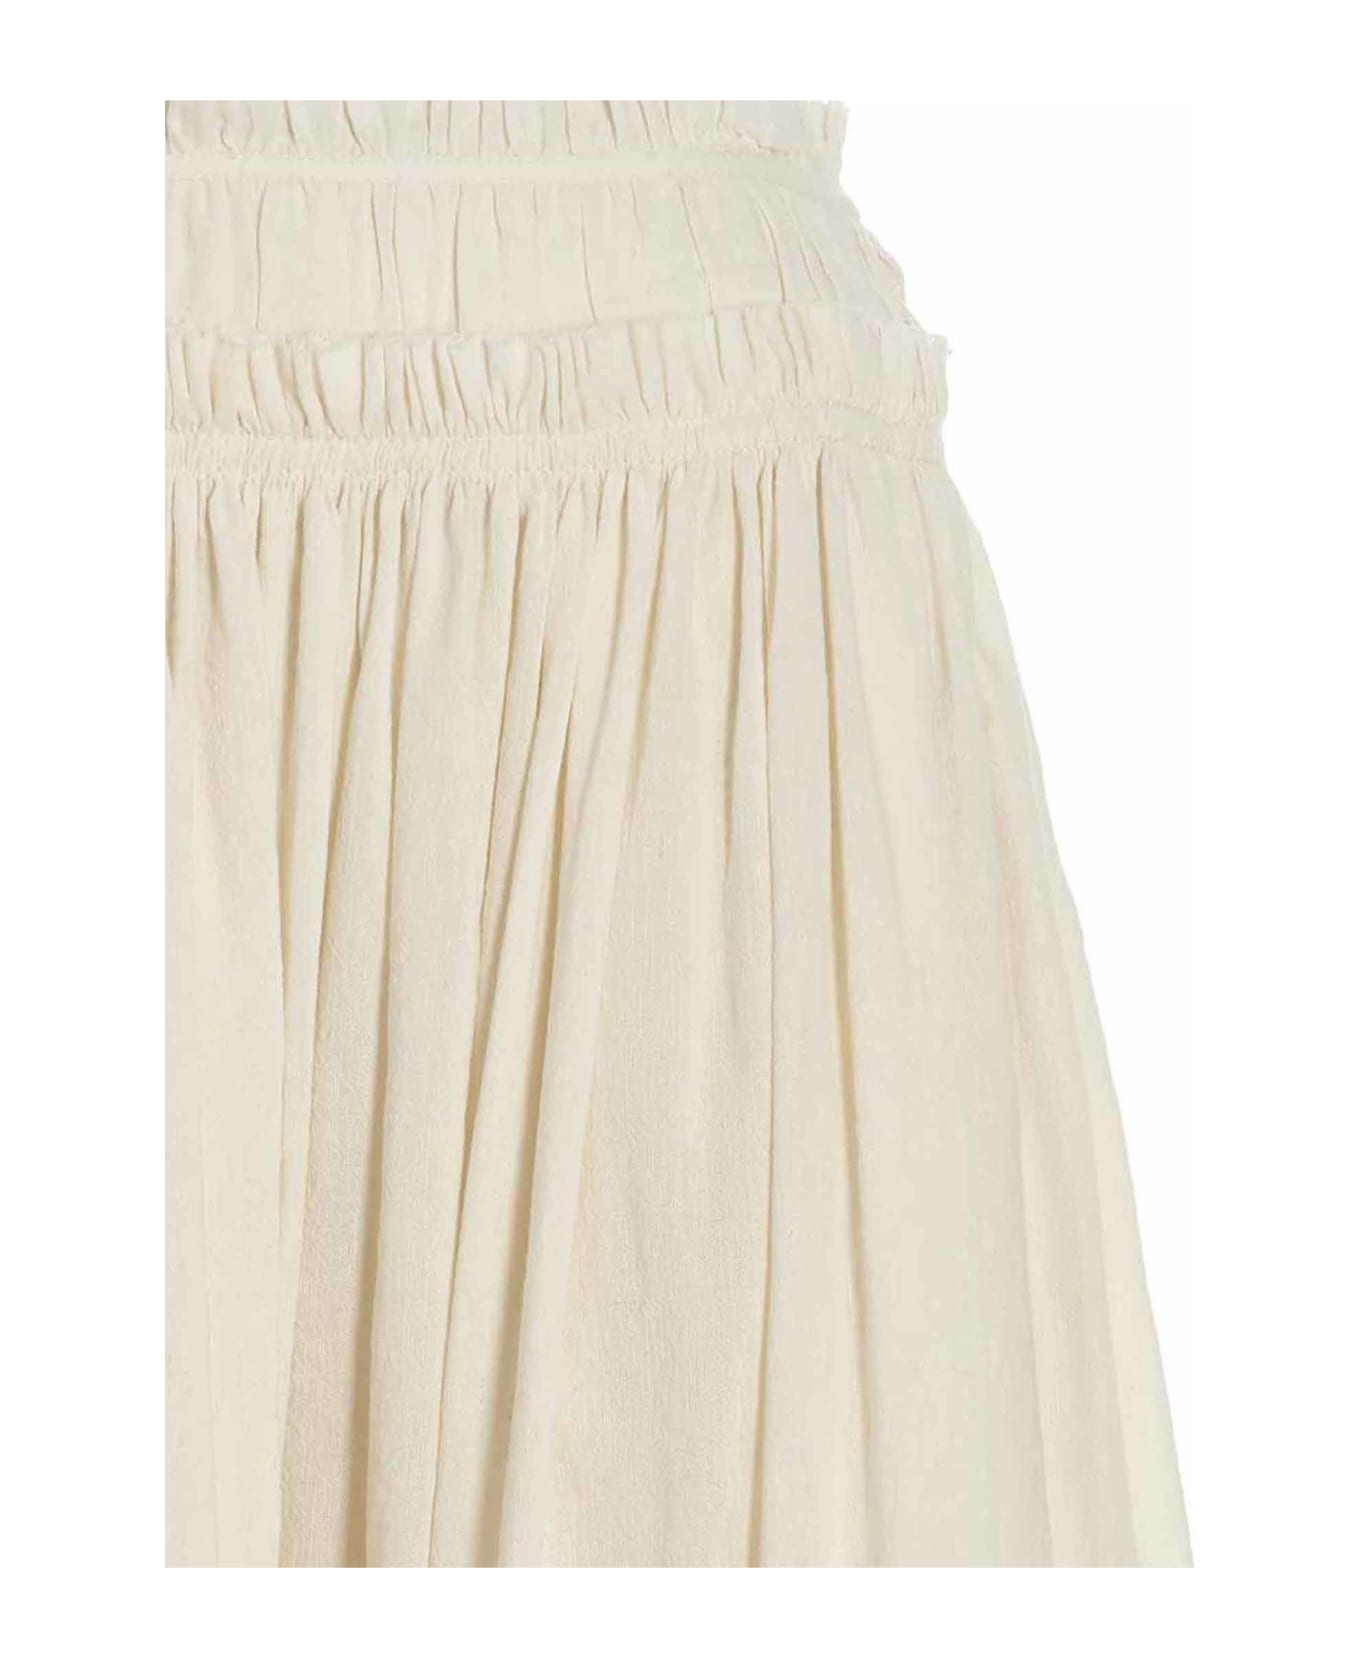 Tory Burch 'rouched Waist' Skirt - White